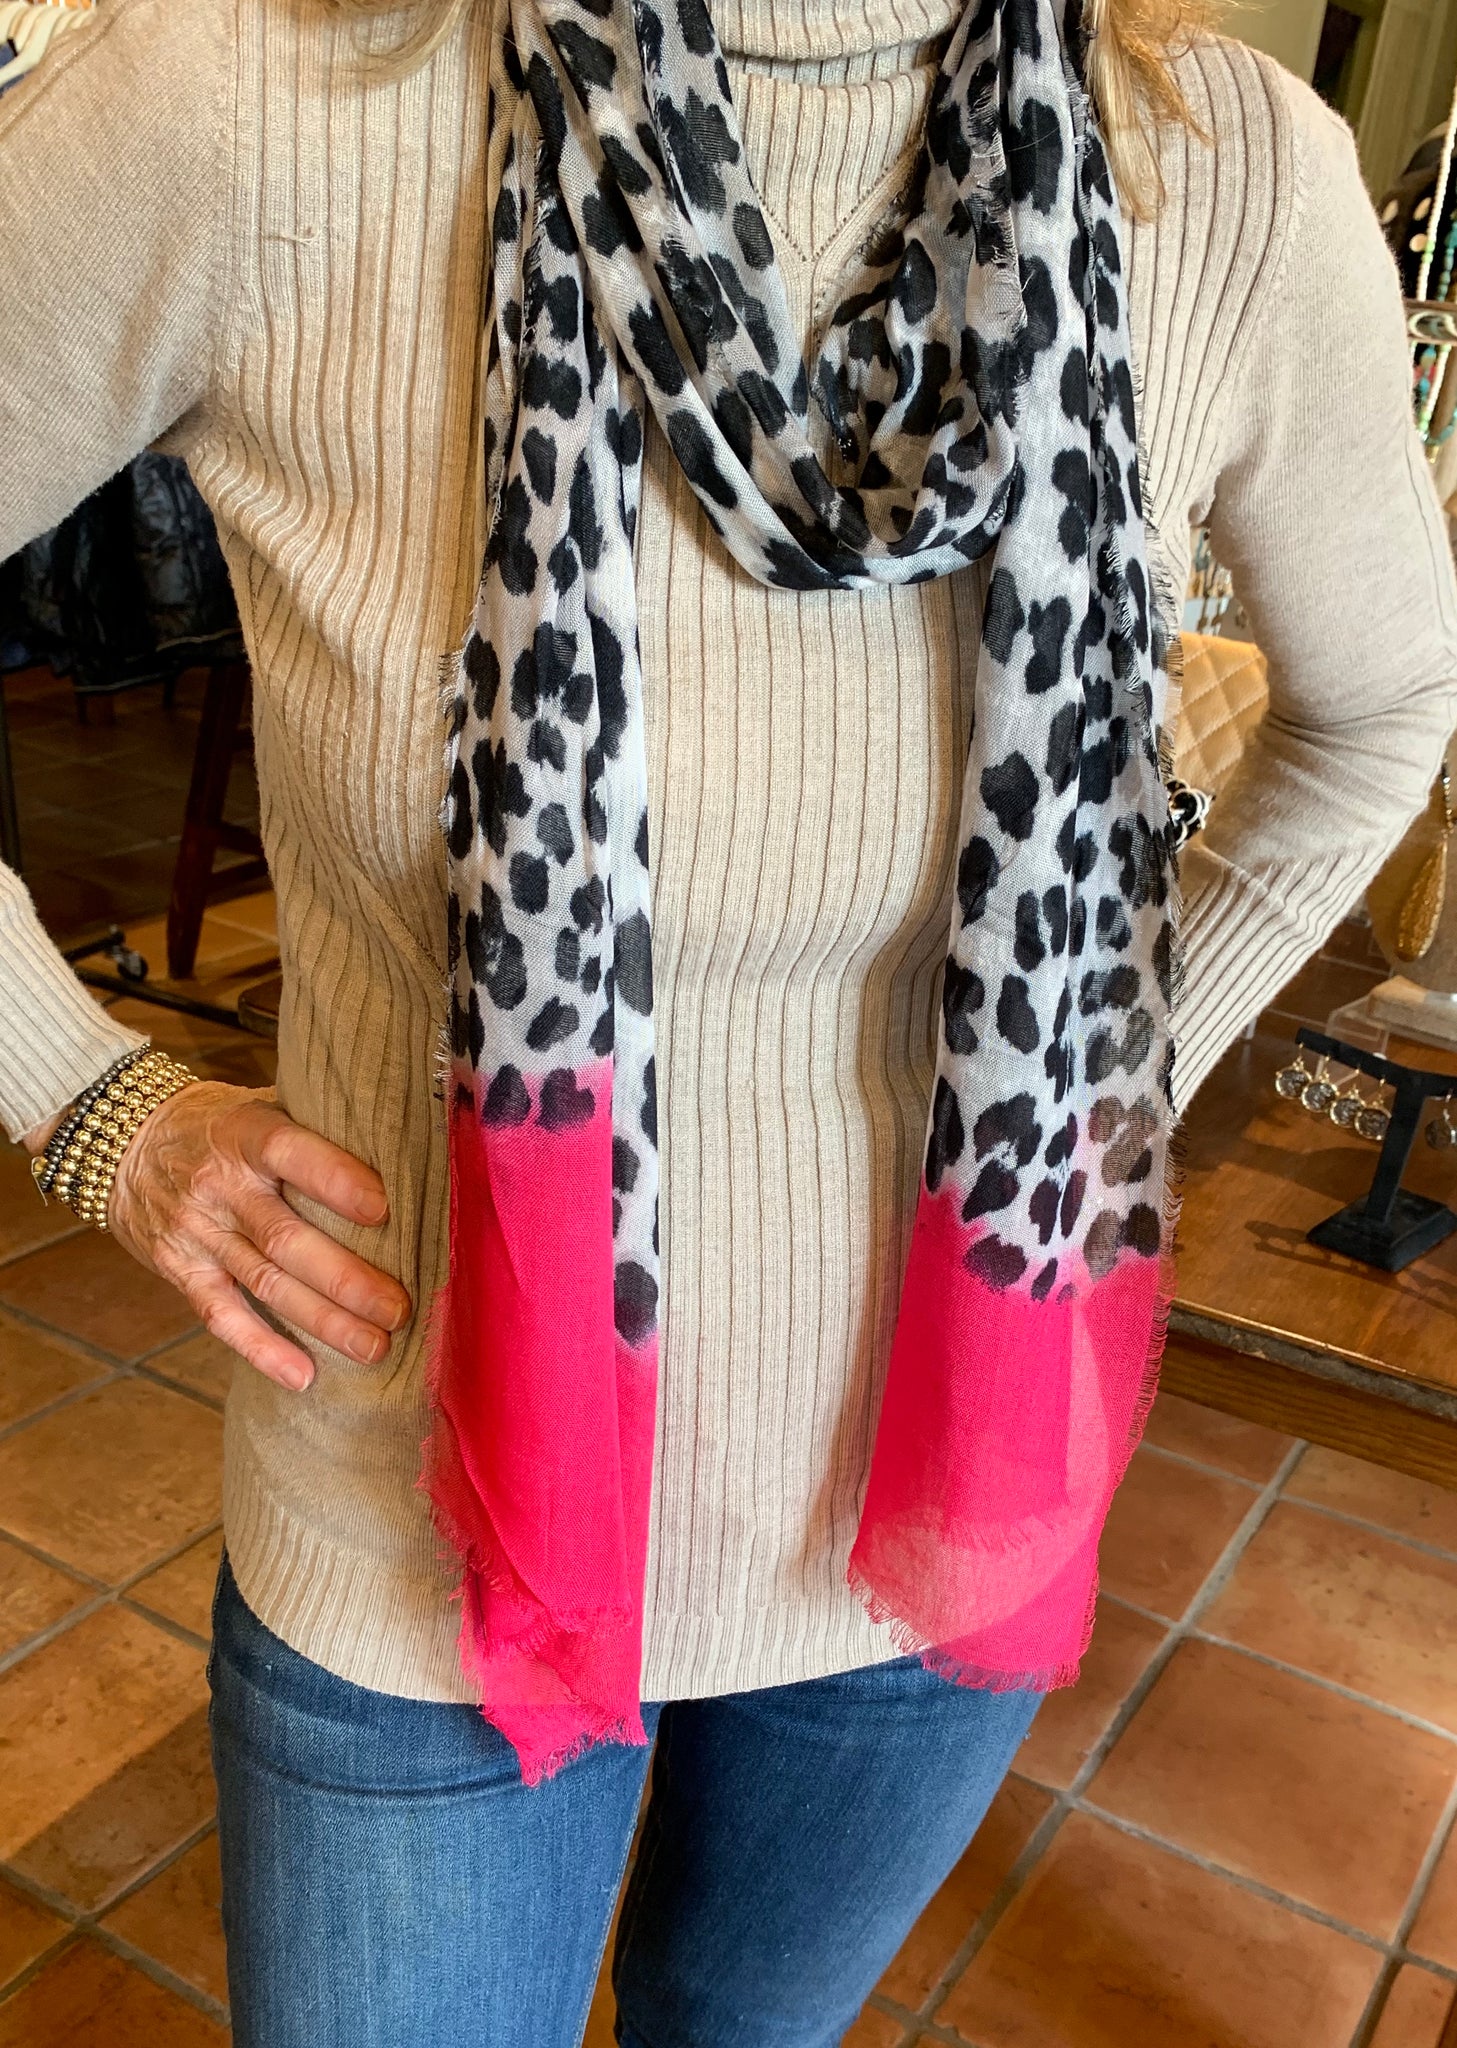 The Mini Leopard print silk and cashmere scarf